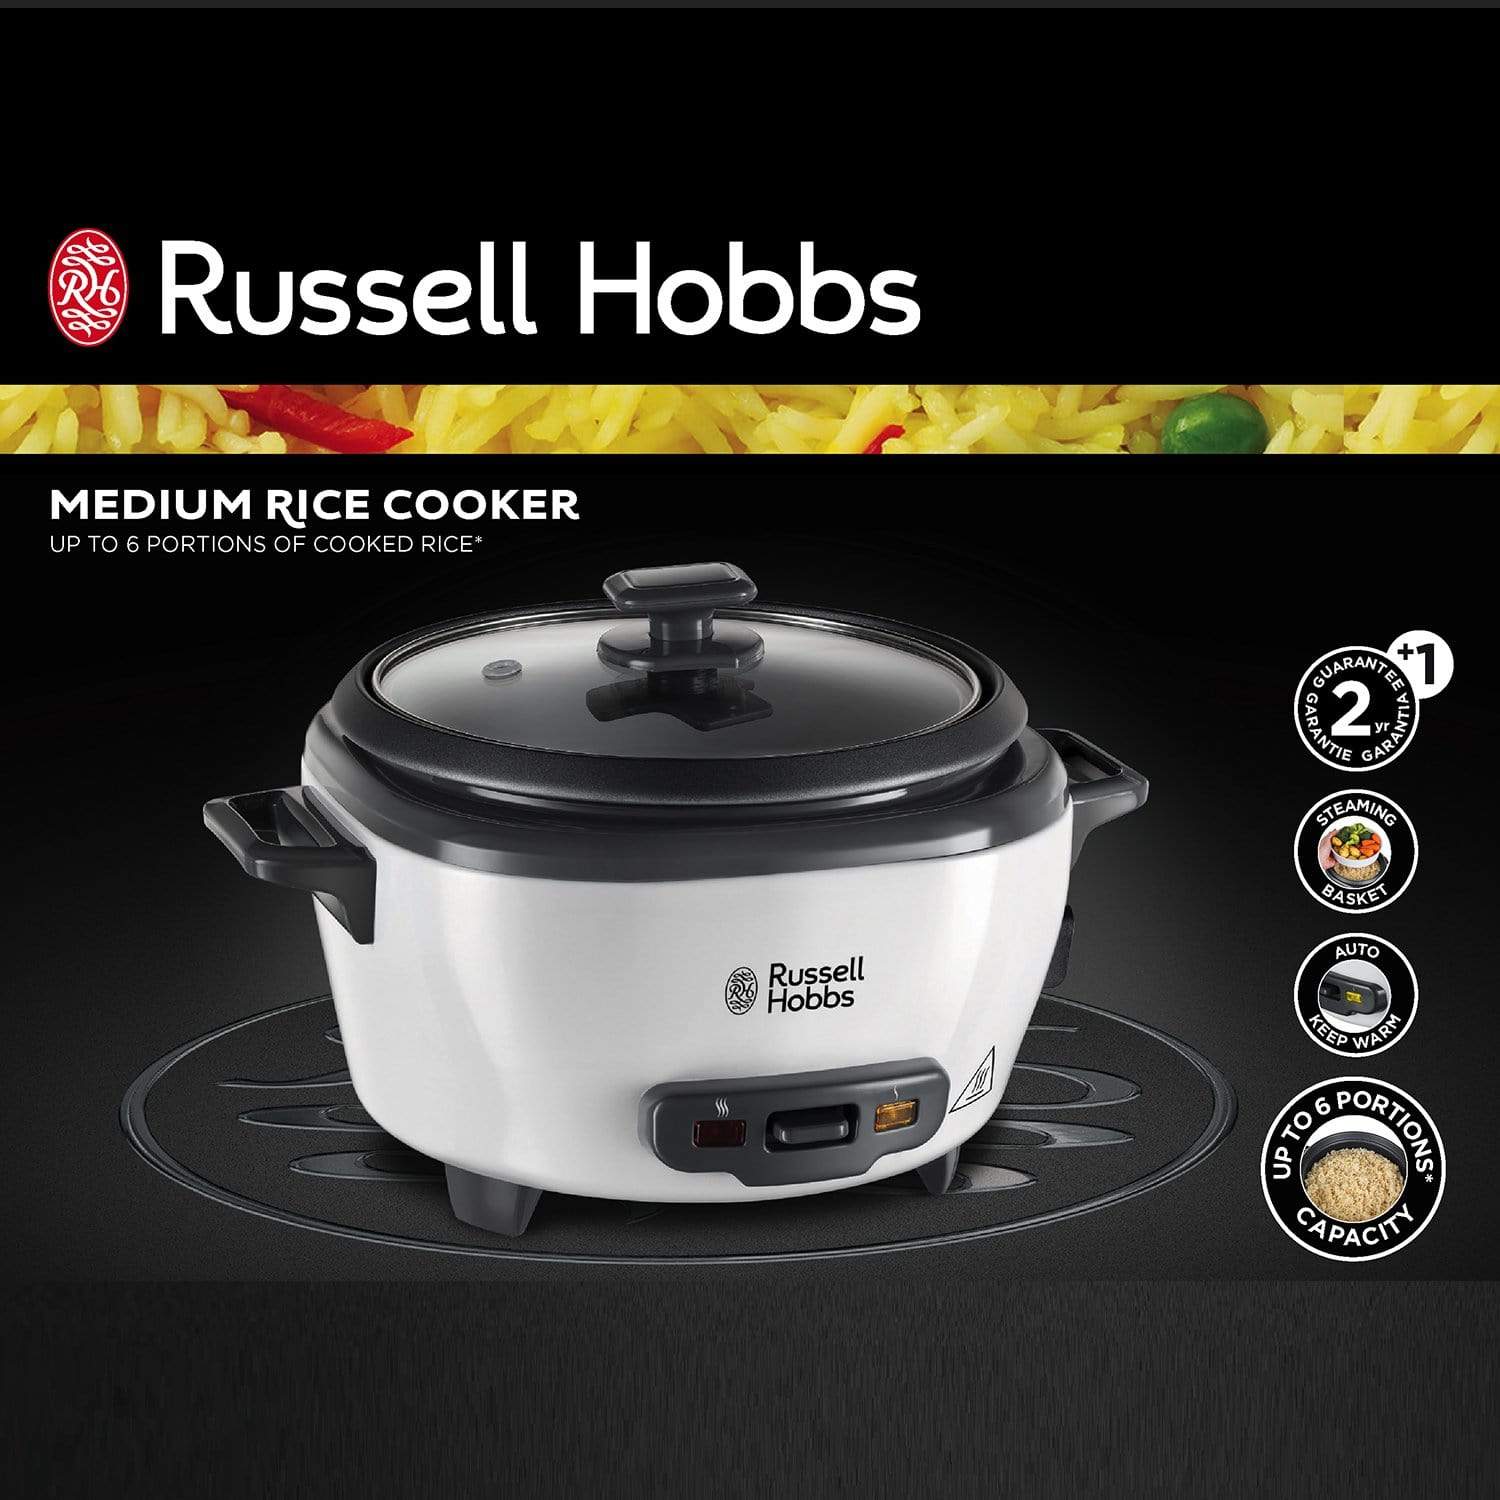 Russell Hobbs Medium Rice Cooker and Steamer